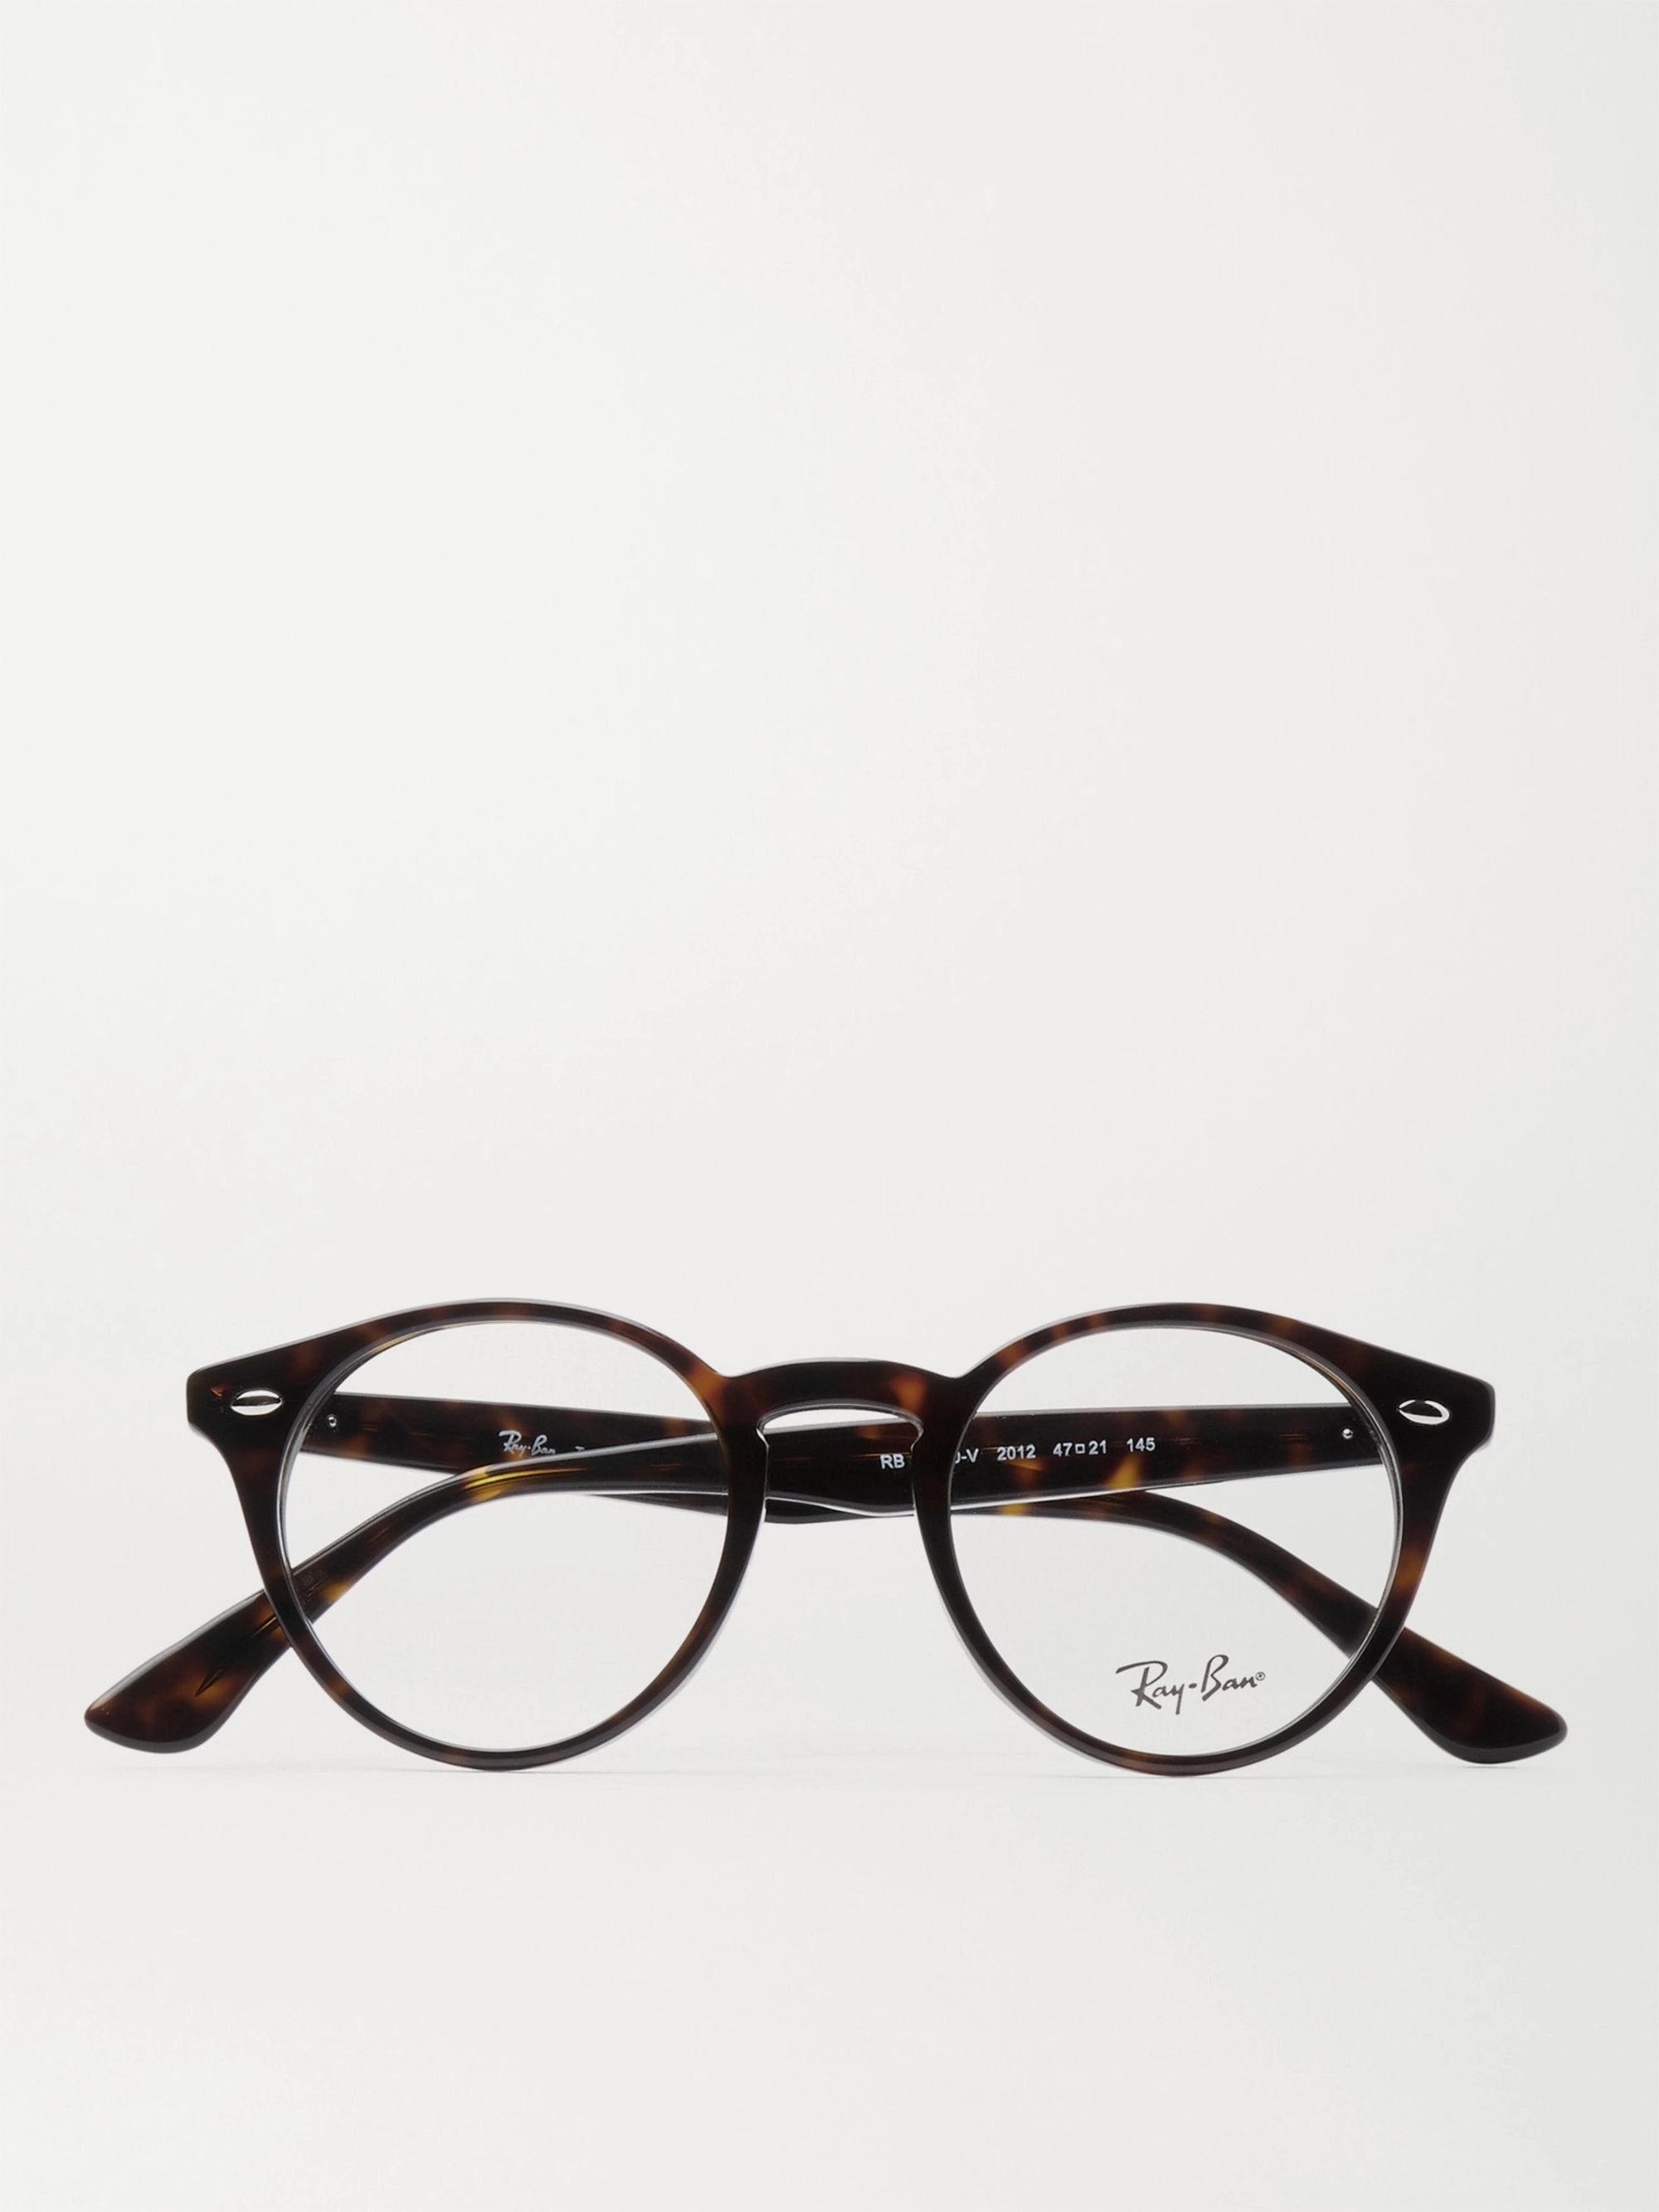 perfectly round eyeglass frames